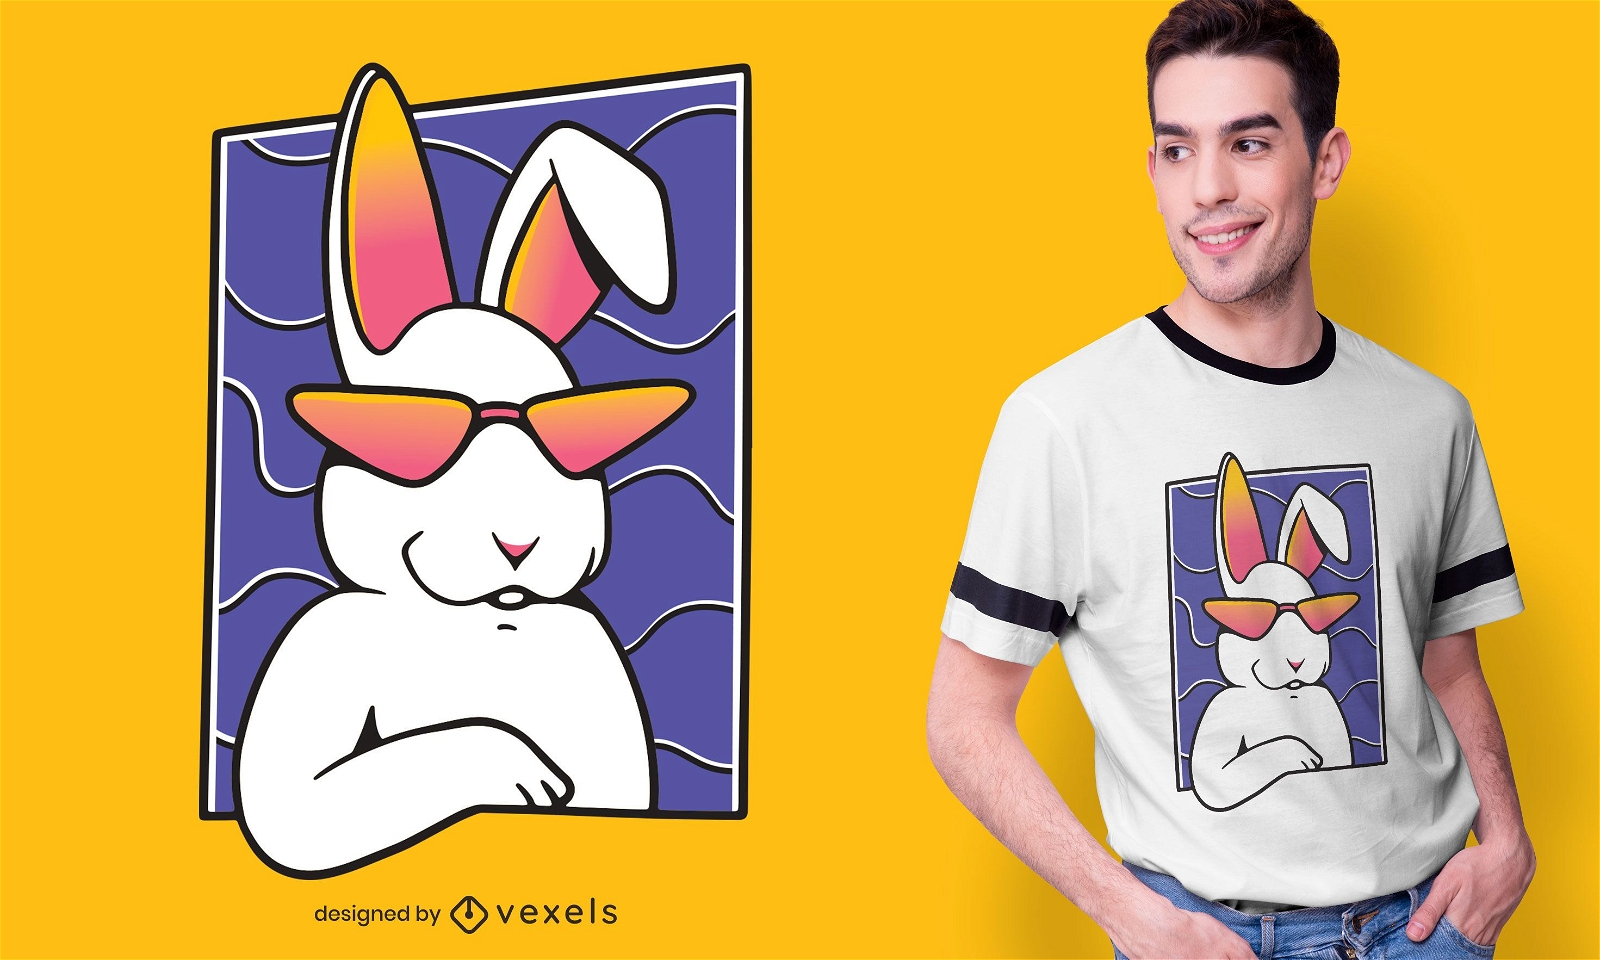 Cool rabbit t-shirt design